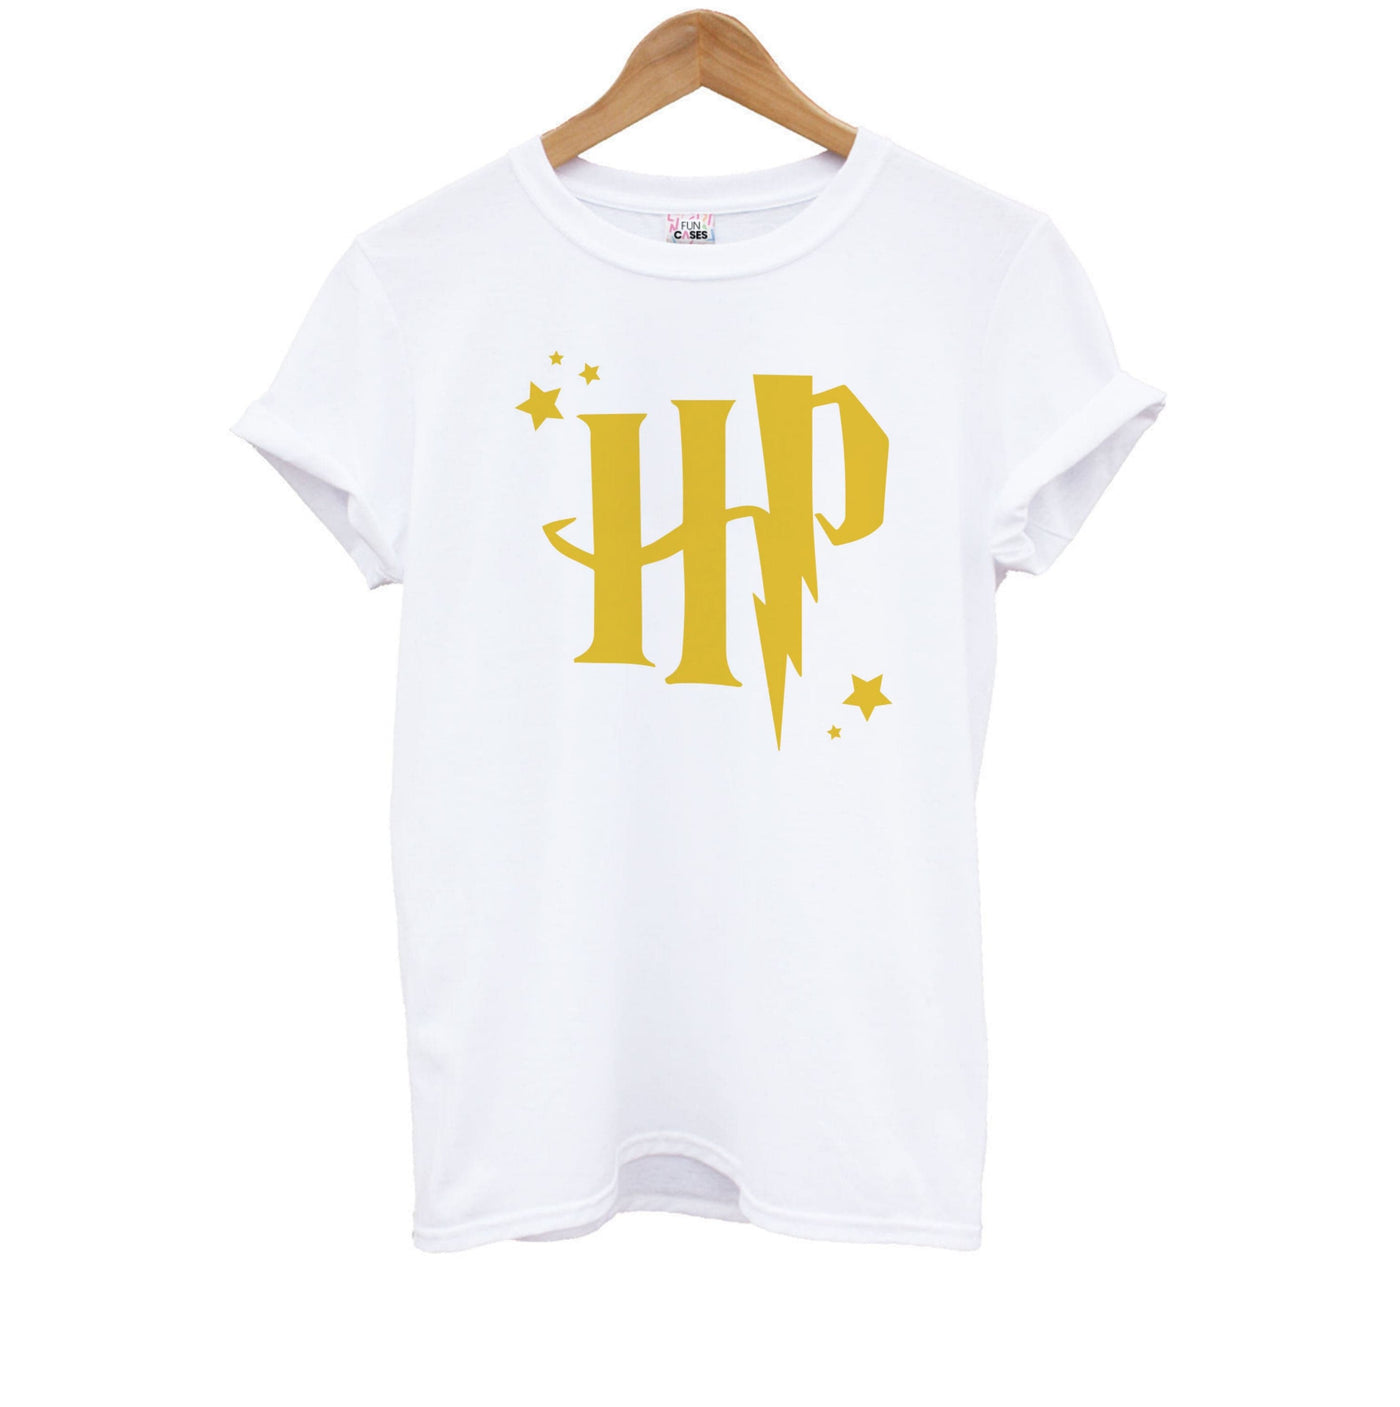 HP - Harry Potter Kids T-Shirt